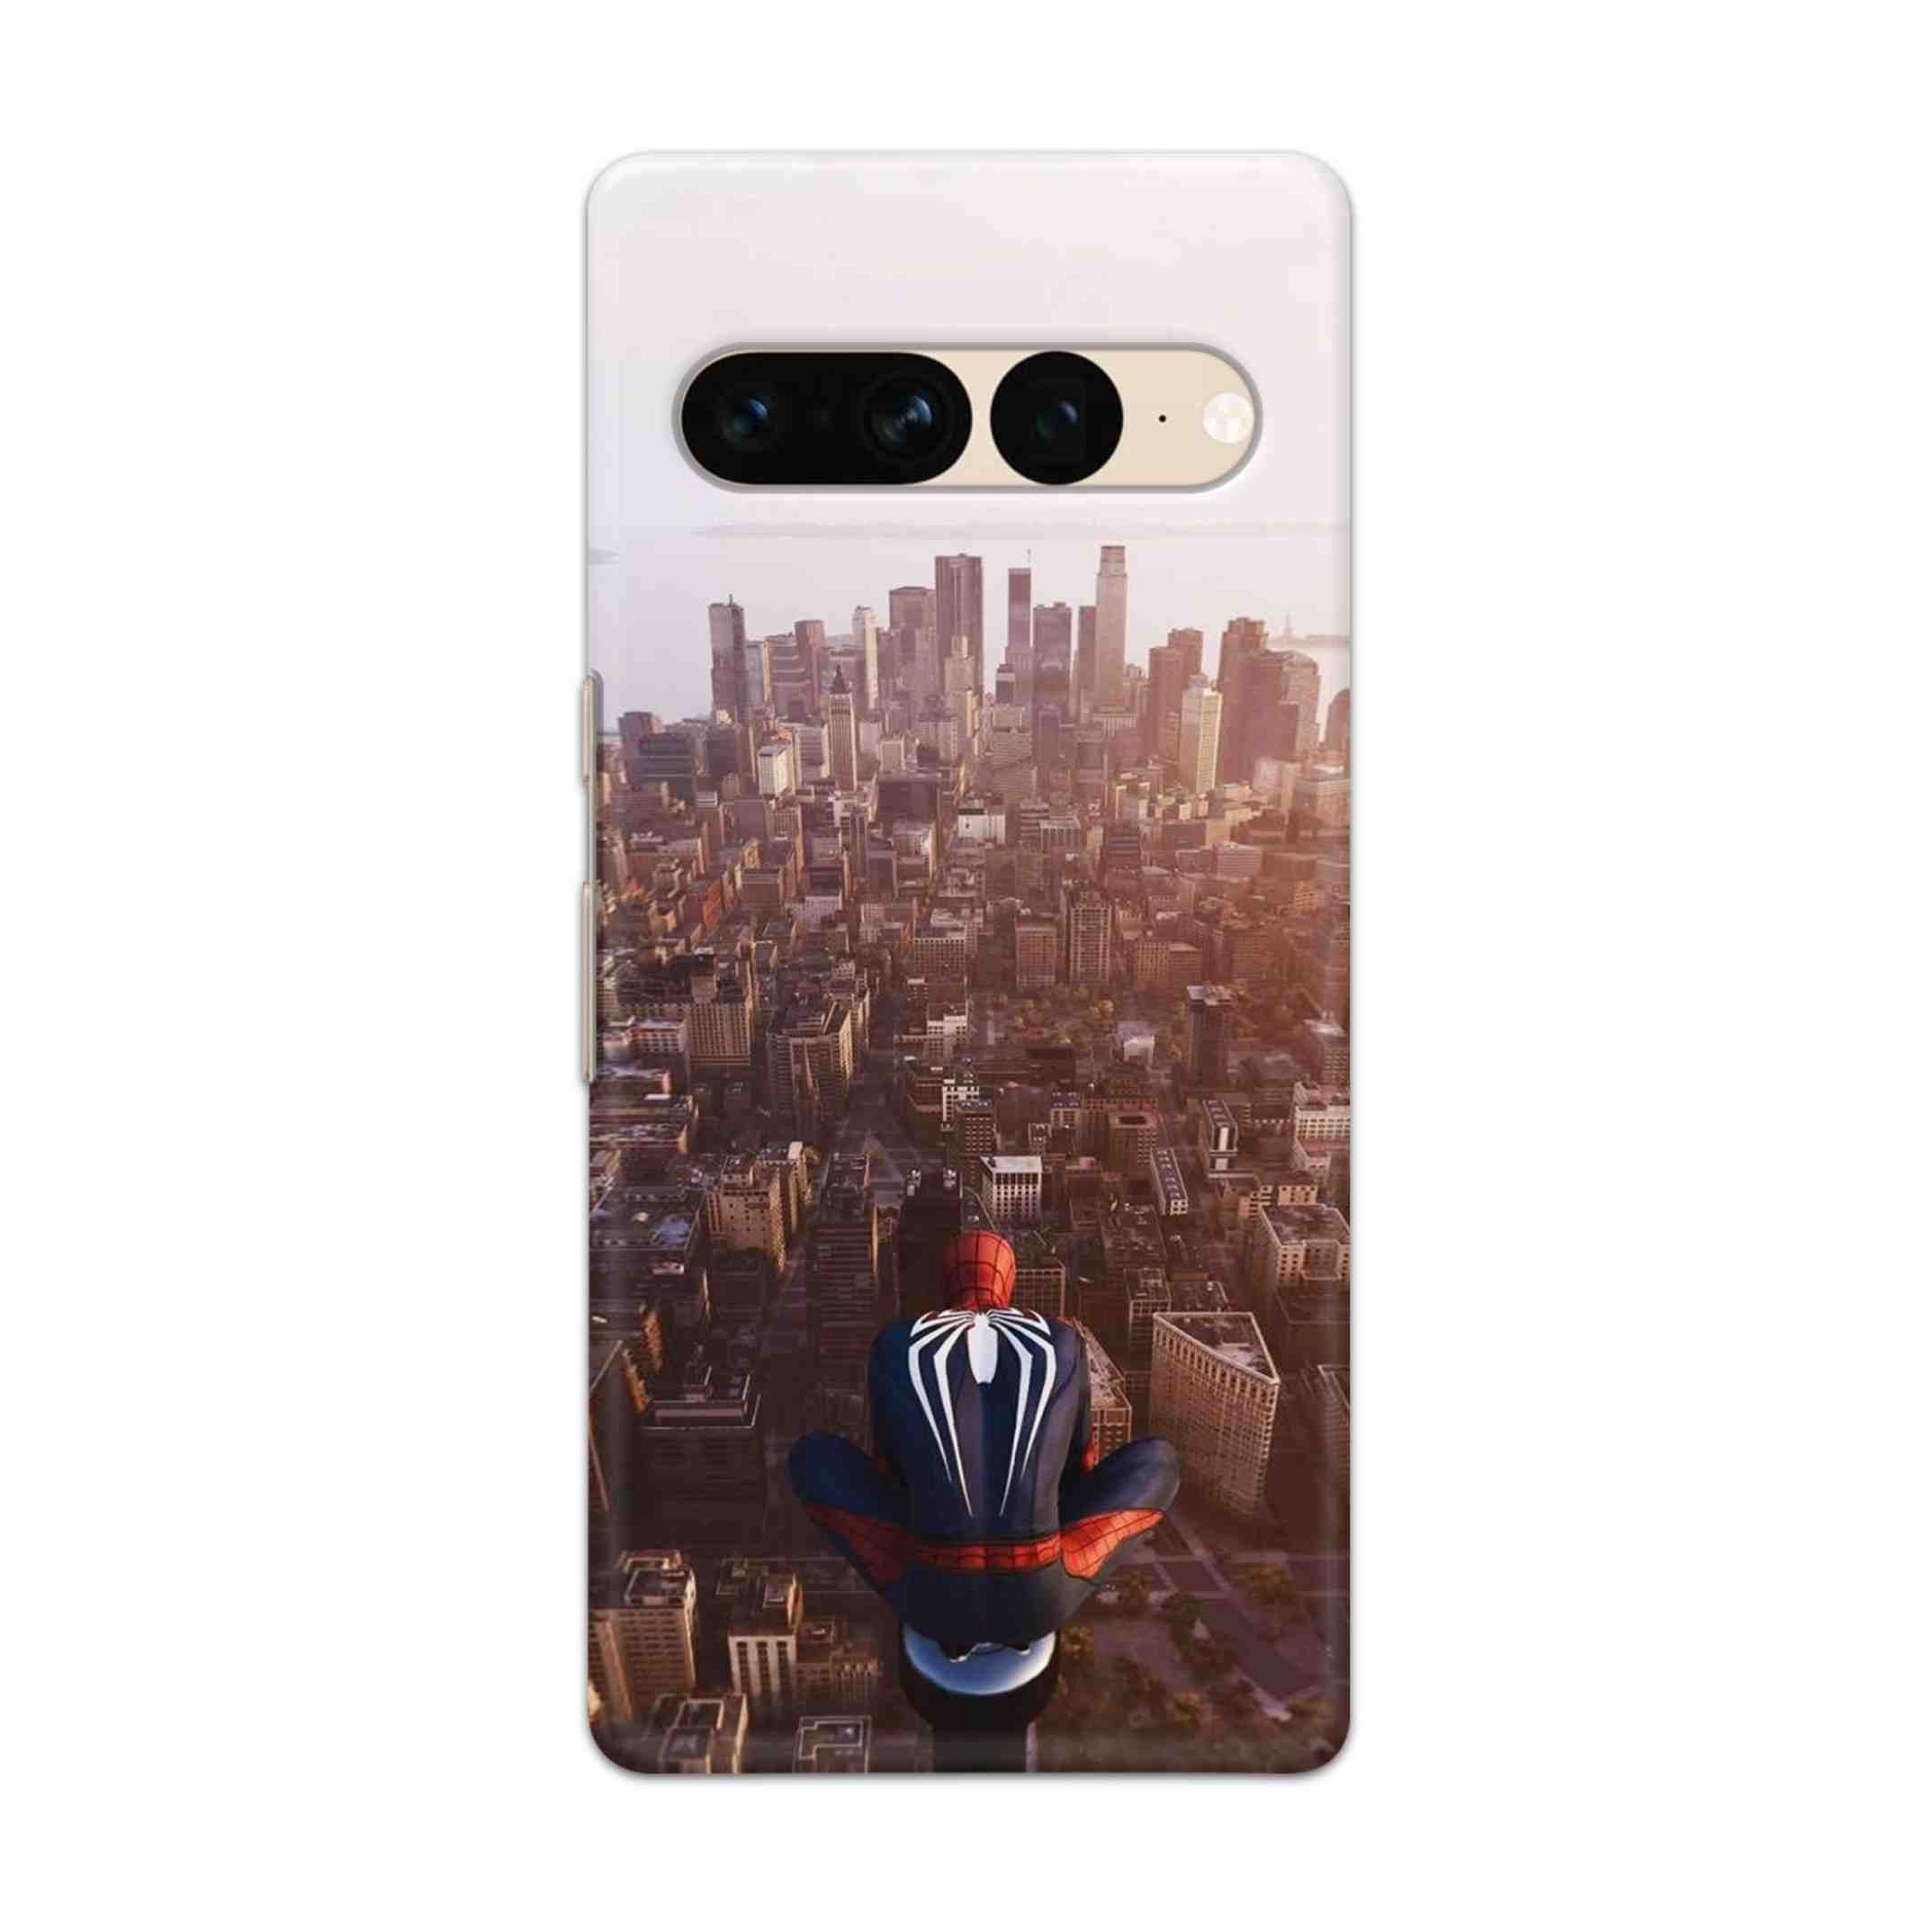 Buy City Of Spiderman Hard Back Mobile Phone Case Cover For Google Pixel 7 Pro Online